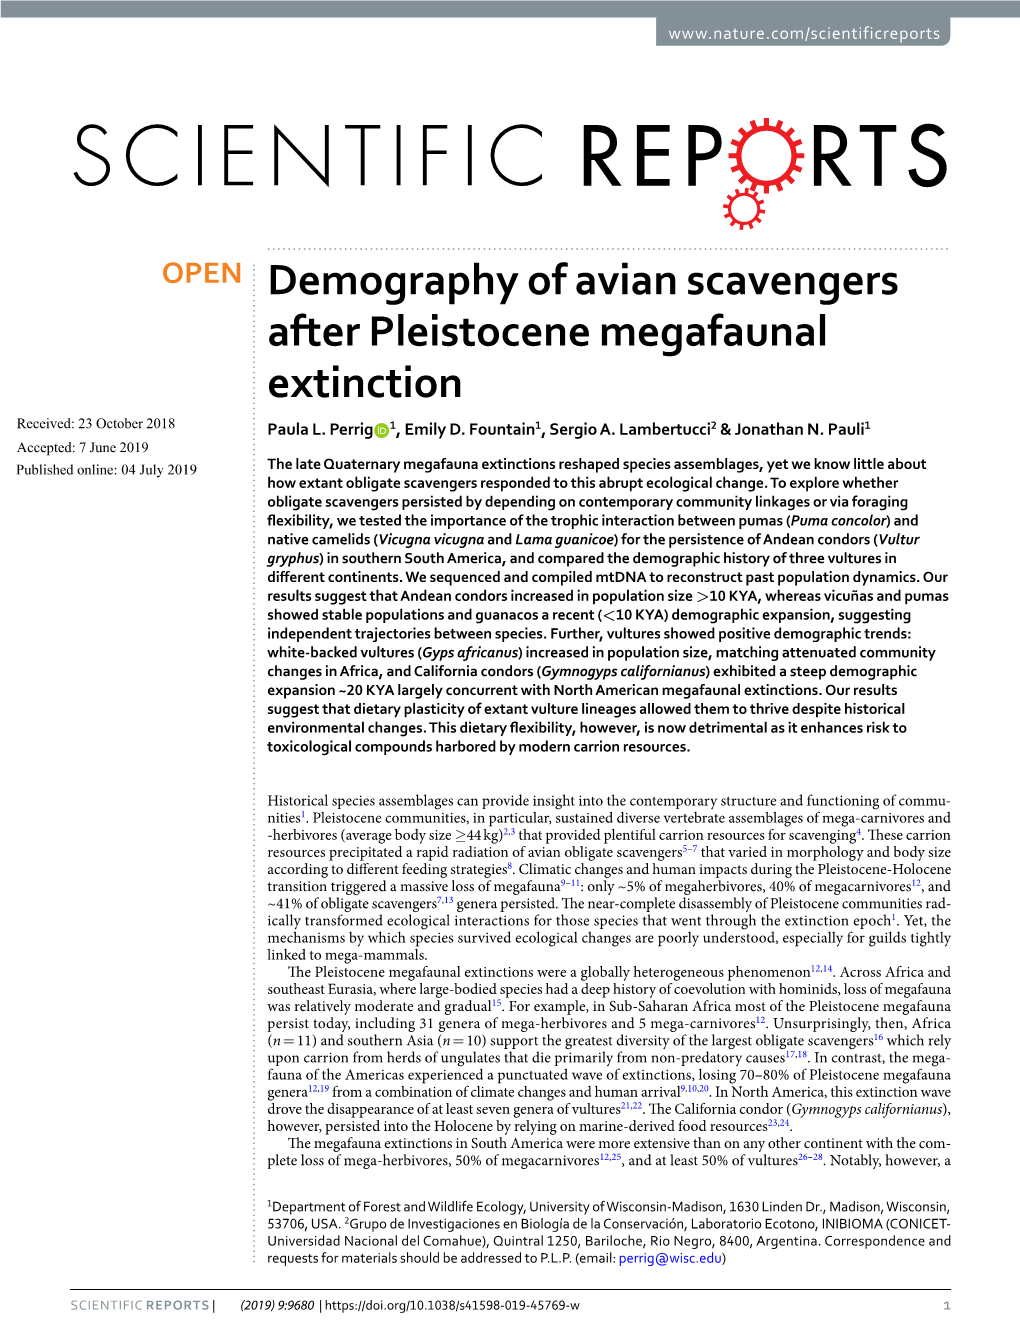 Demography of Avian Scavengers After Pleistocene Megafaunal Extinction Received: 23 October 2018 Paula L